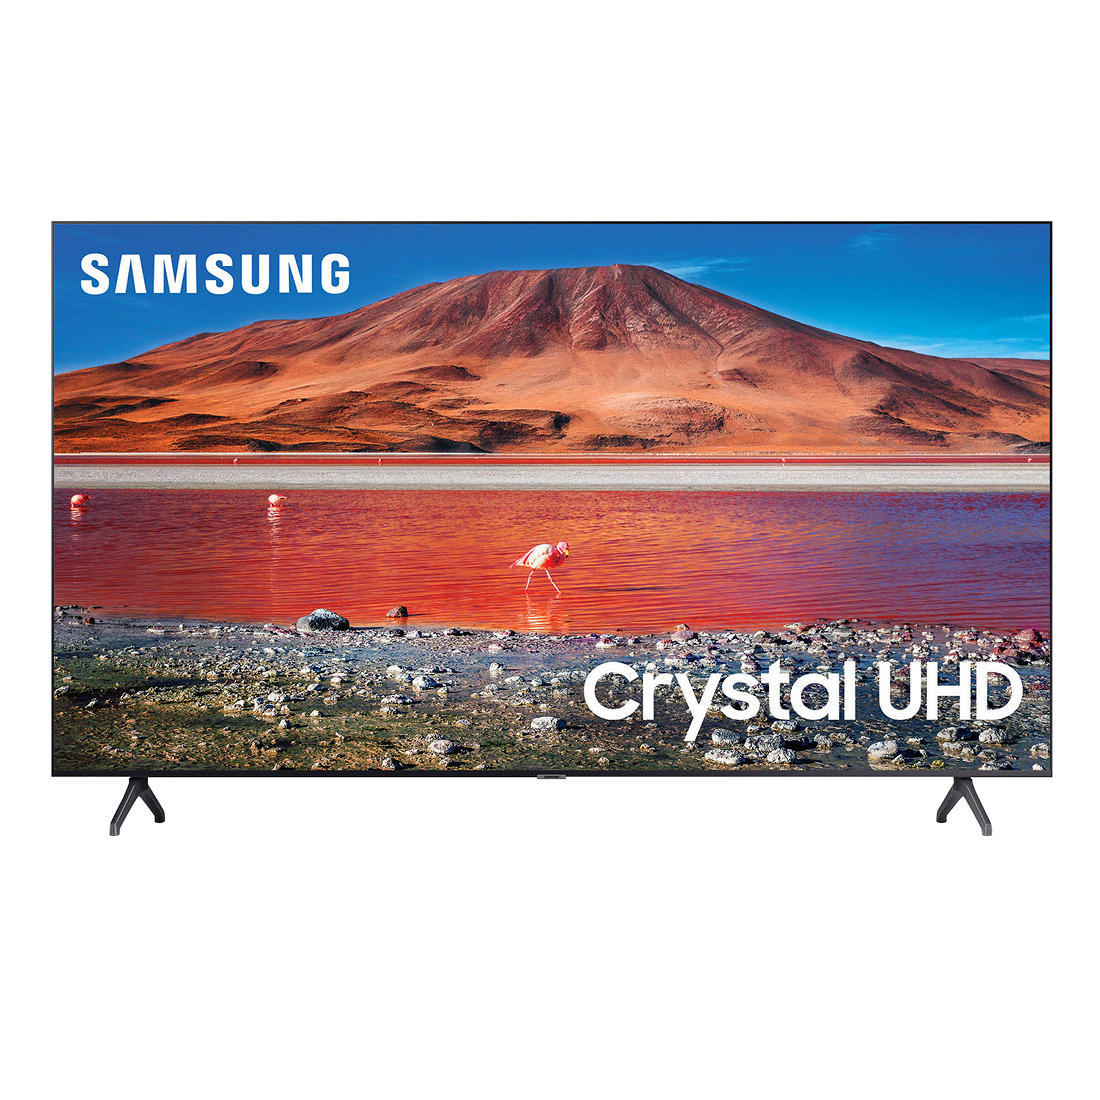 Samsung 82" TU700D Crystal UHD 4K Smart TV - UN82TU700DFXZA and 3-Year Warranty $1199.99